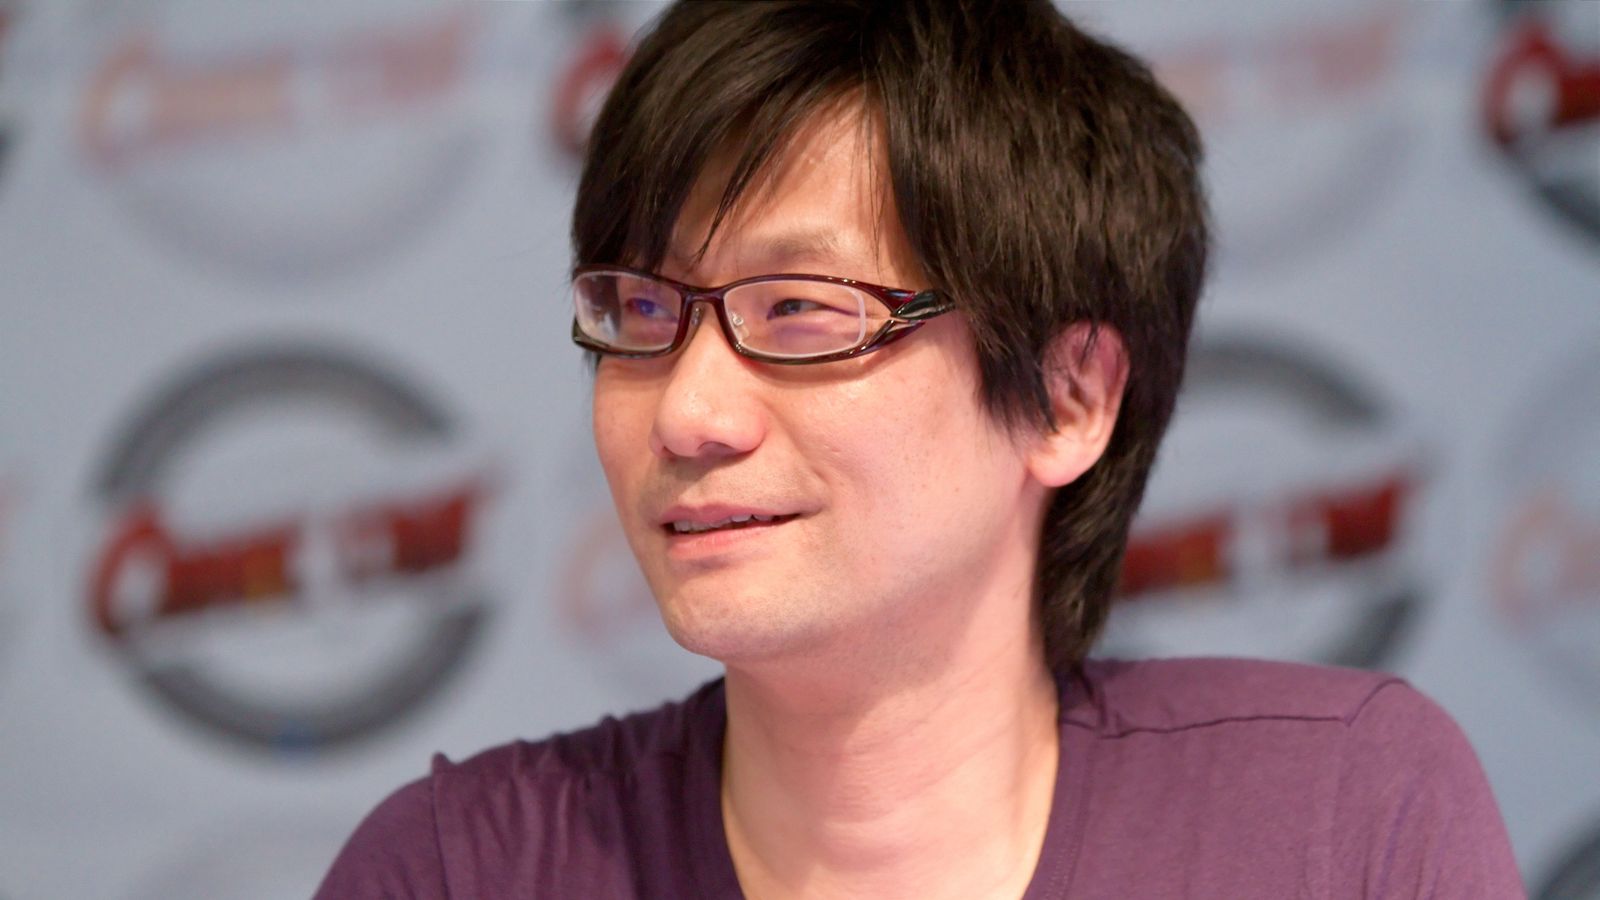 Hideo Kojima teases new Kojima Productions game starring Elle